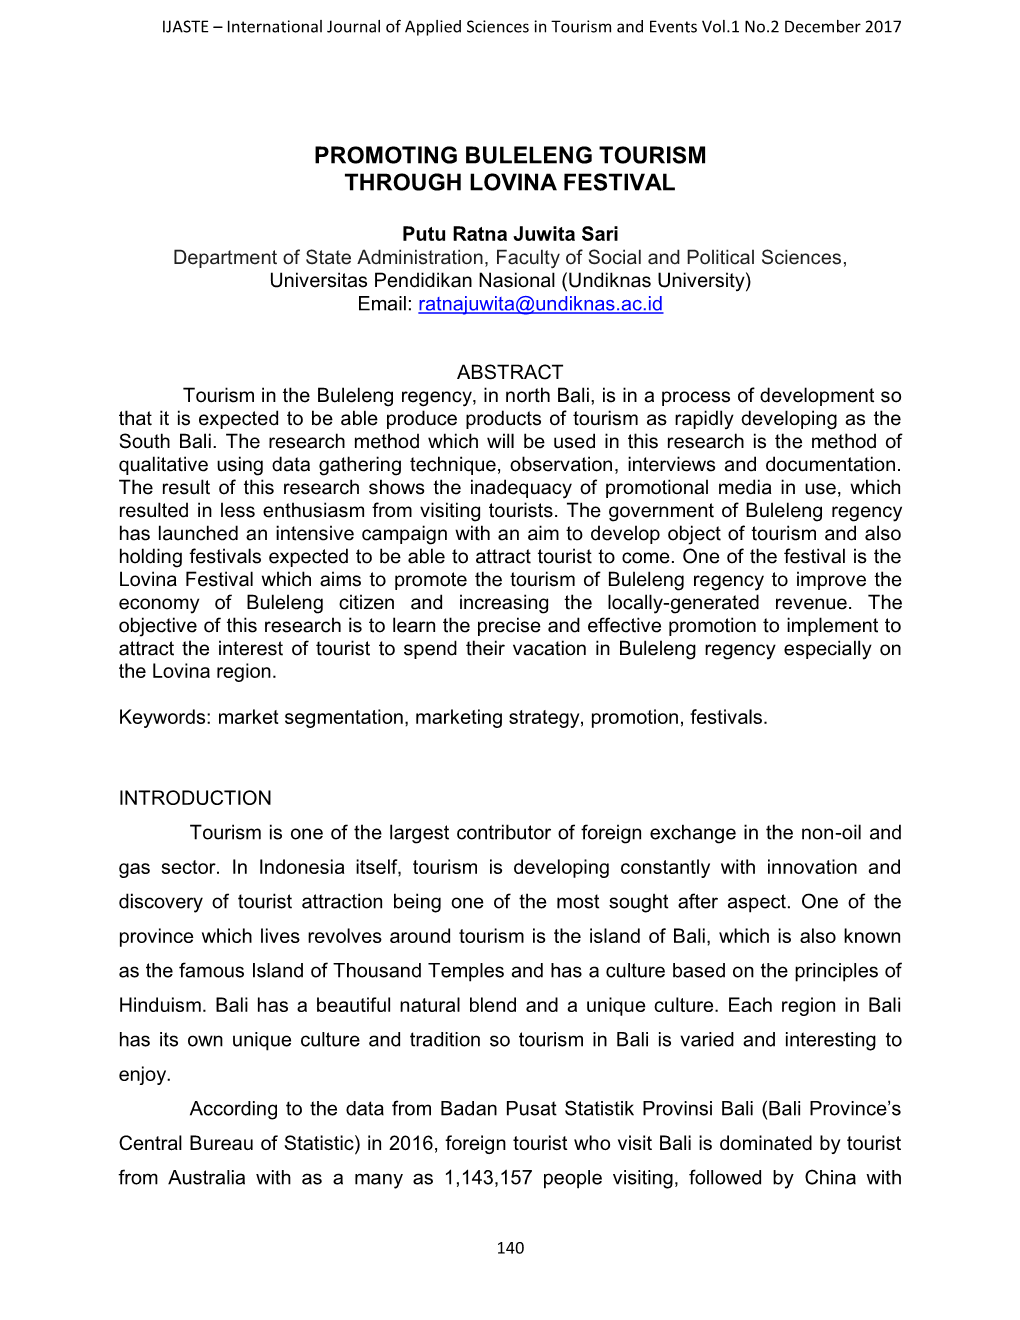 Promoting Buleleng Tourism Through Lovina Festival